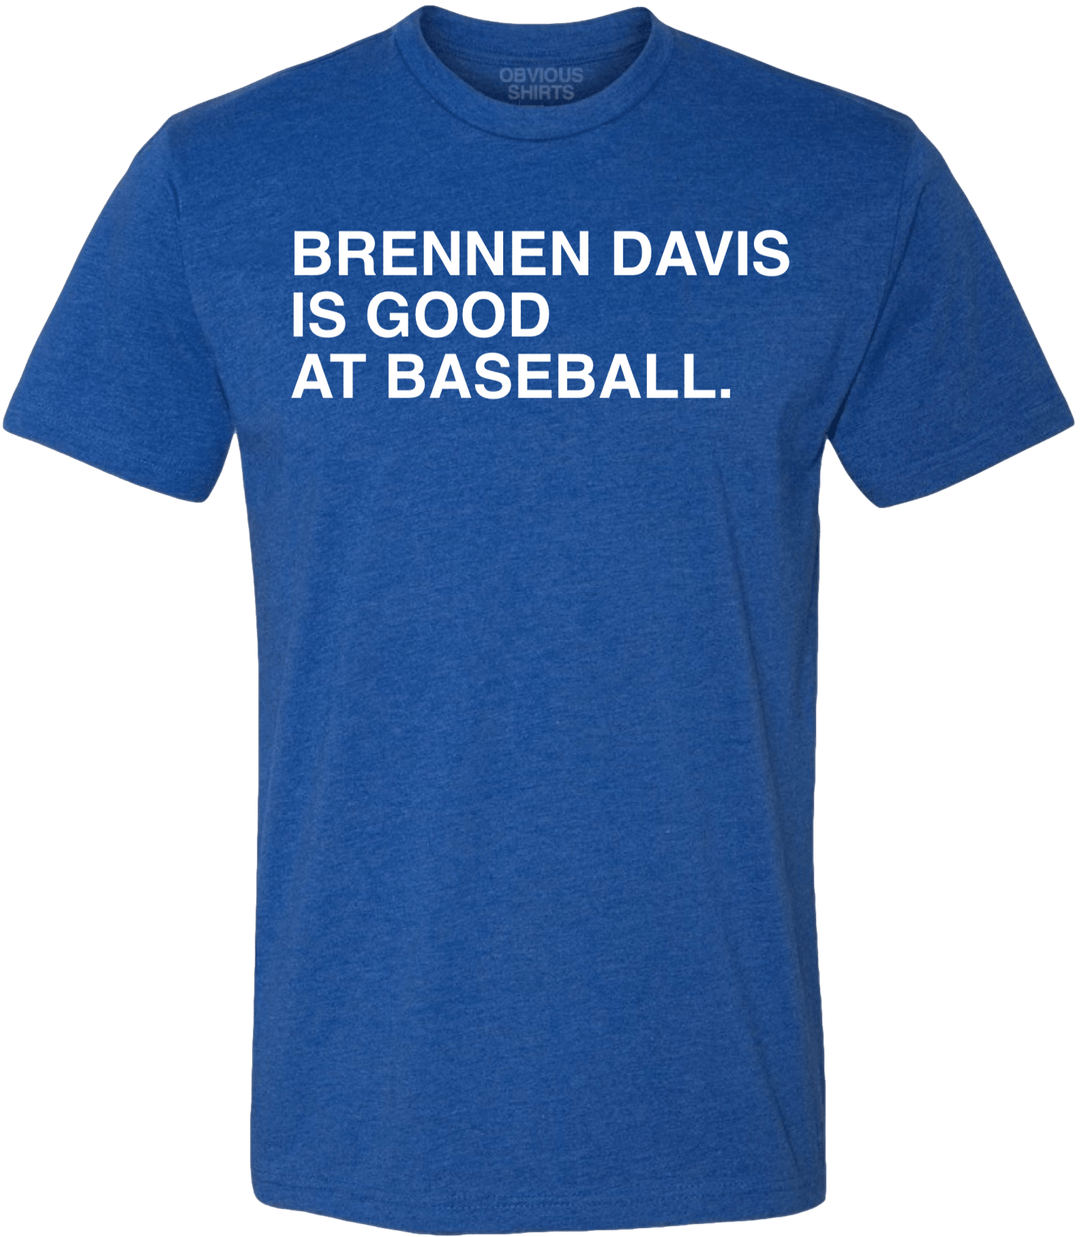 BRENNEN DAVIS IS GOOD AT BASEBALL. - OBVIOUS SHIRTS